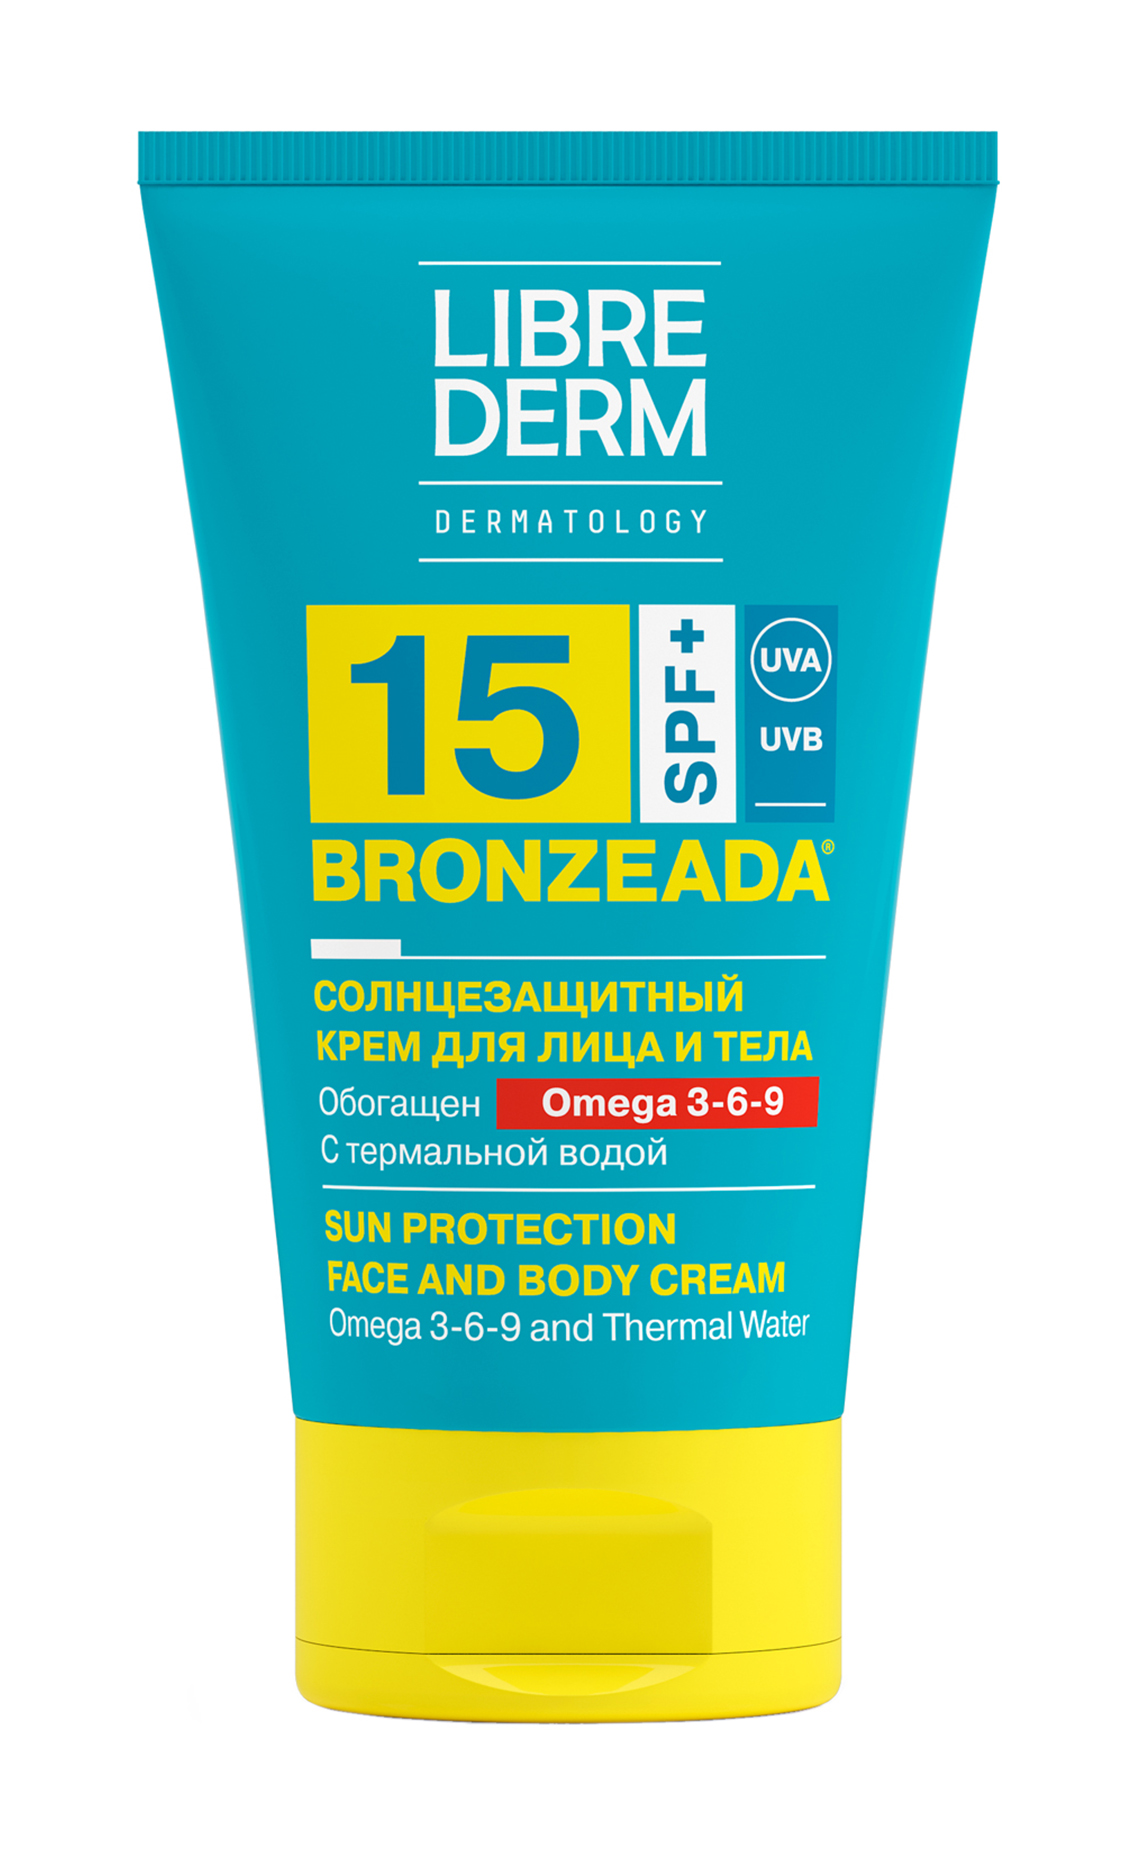 Крем LIBREDERM Bronzeada Sun Protection Face and Body, 150мл suntek quality top coating tpu paint protection film for car body